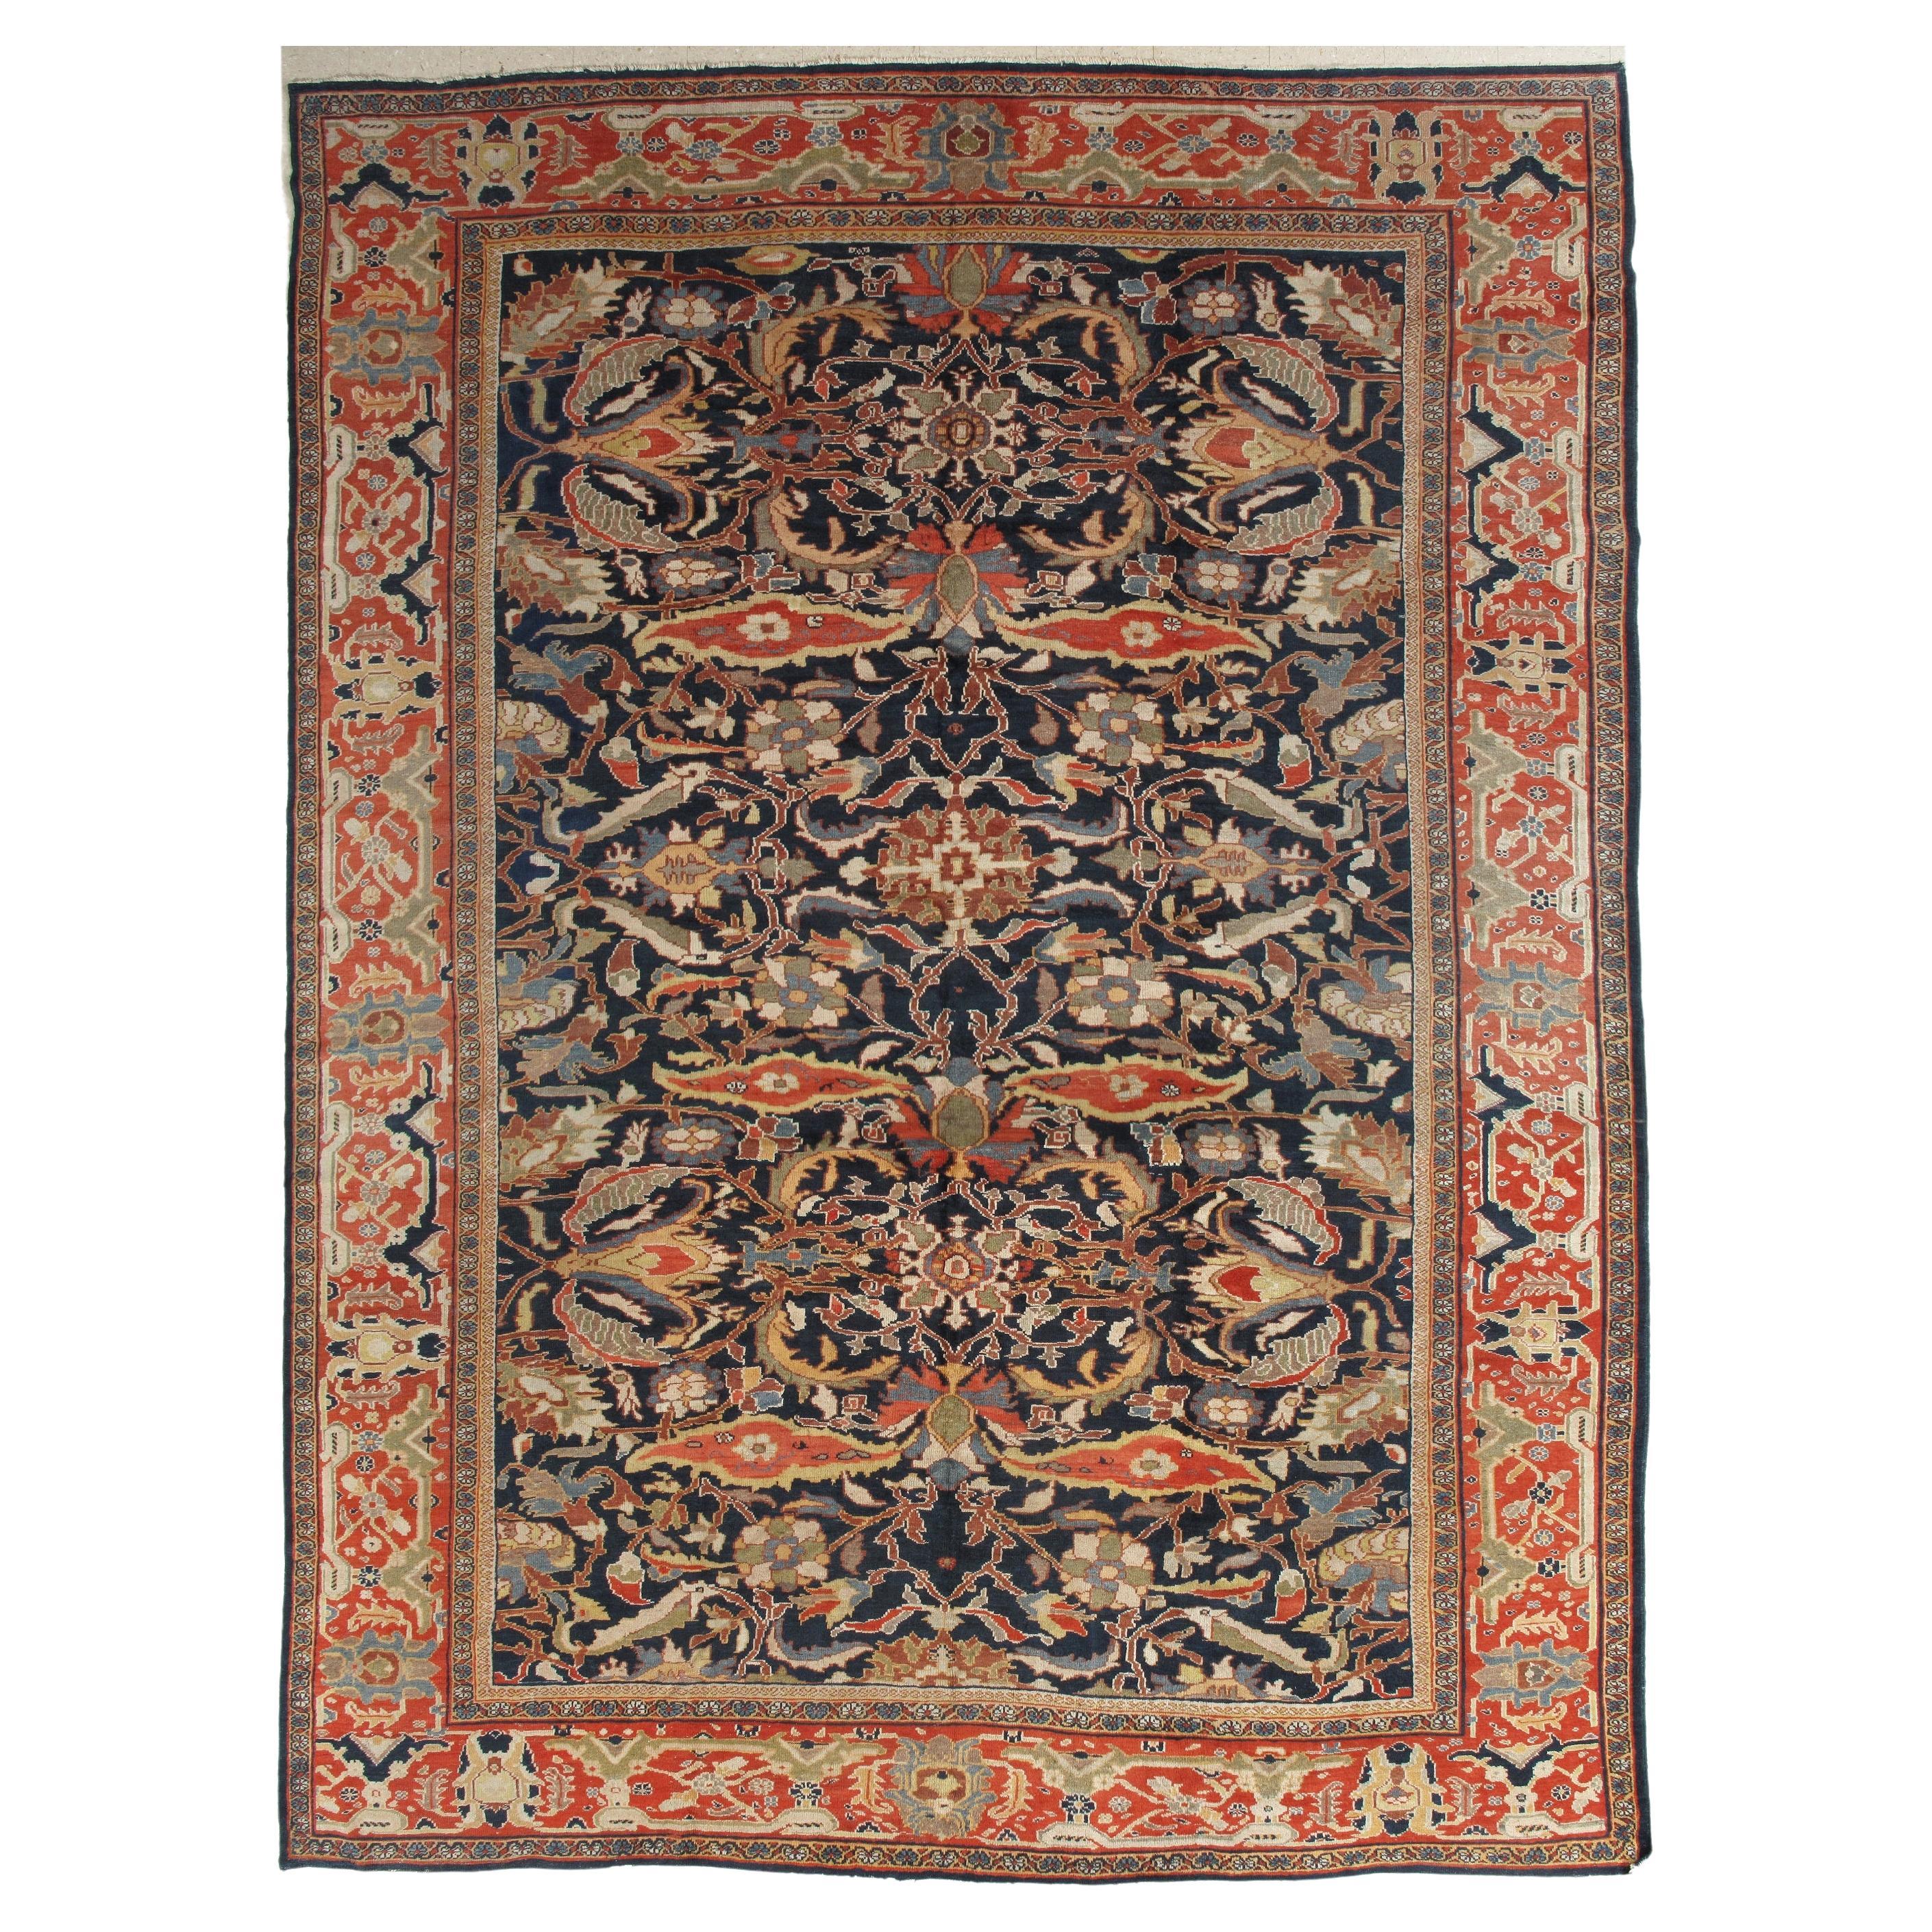 Antique Persian Sultanabad Carpet, Handmade Oriental Rug, Navy Blue, Rust, Gold